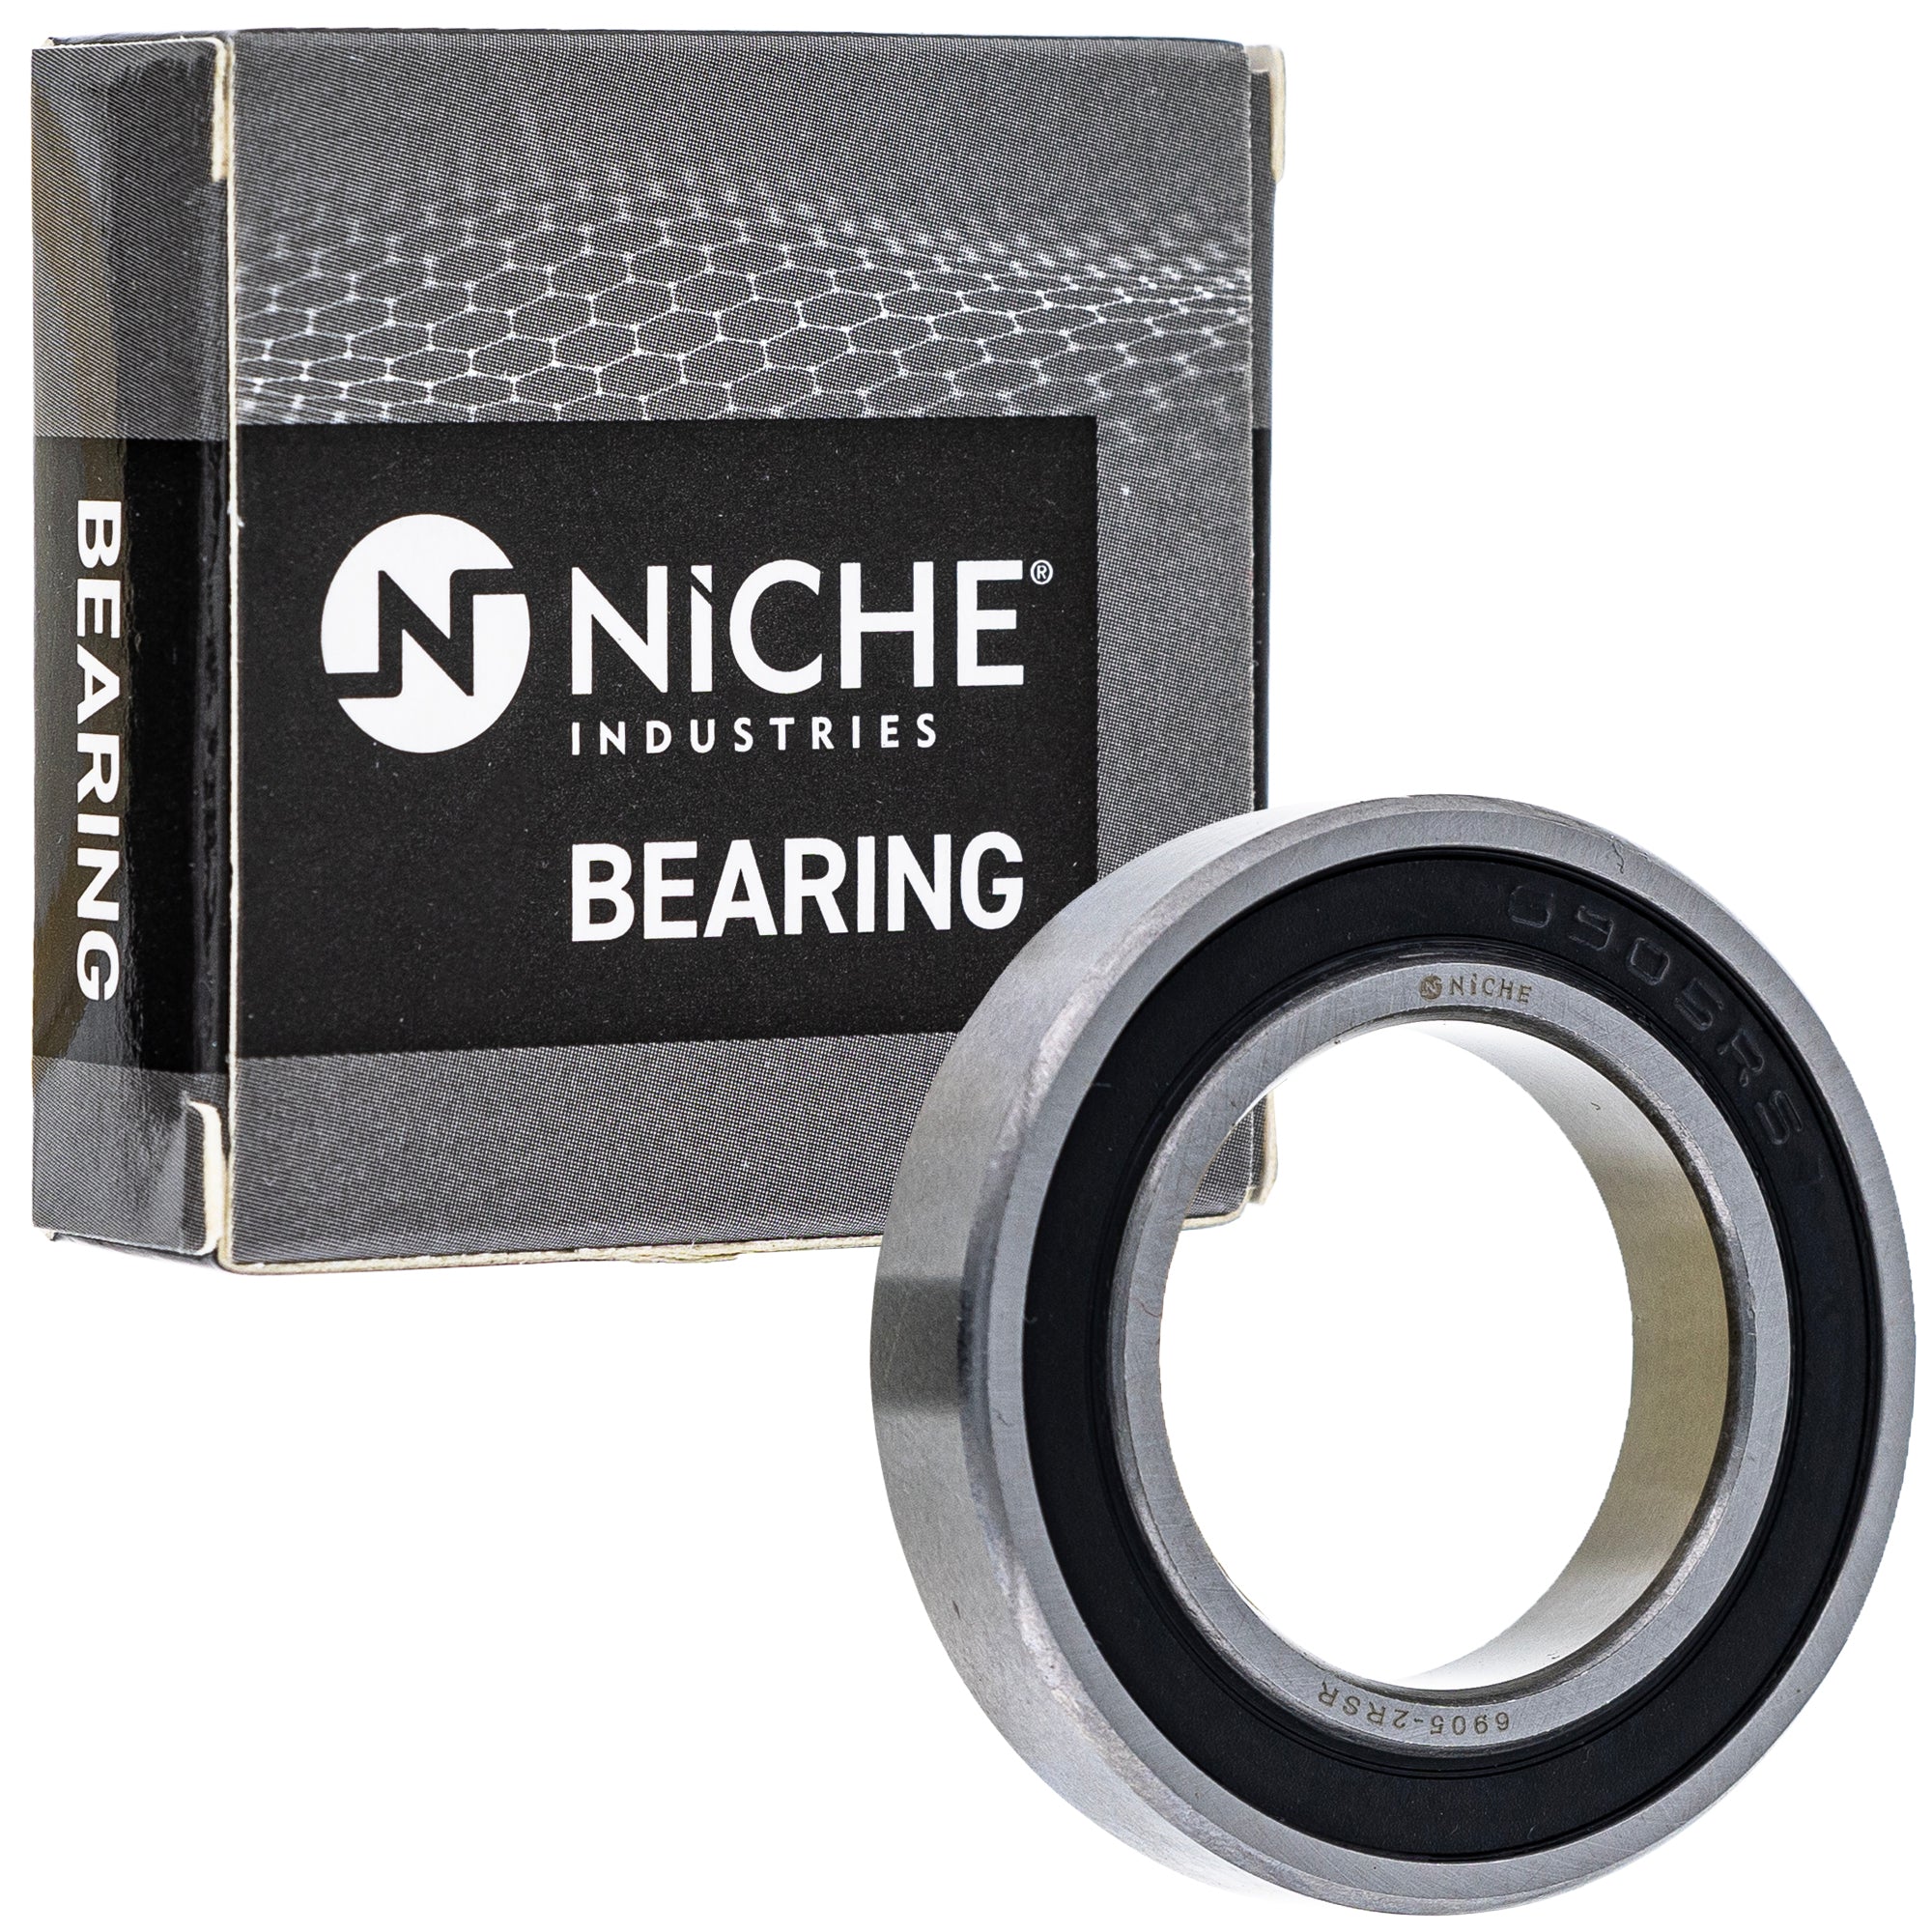 NICHE 519-CBB2338R Bearing 10-Pack for zOTHER VTX1800T3 VTX1800T2